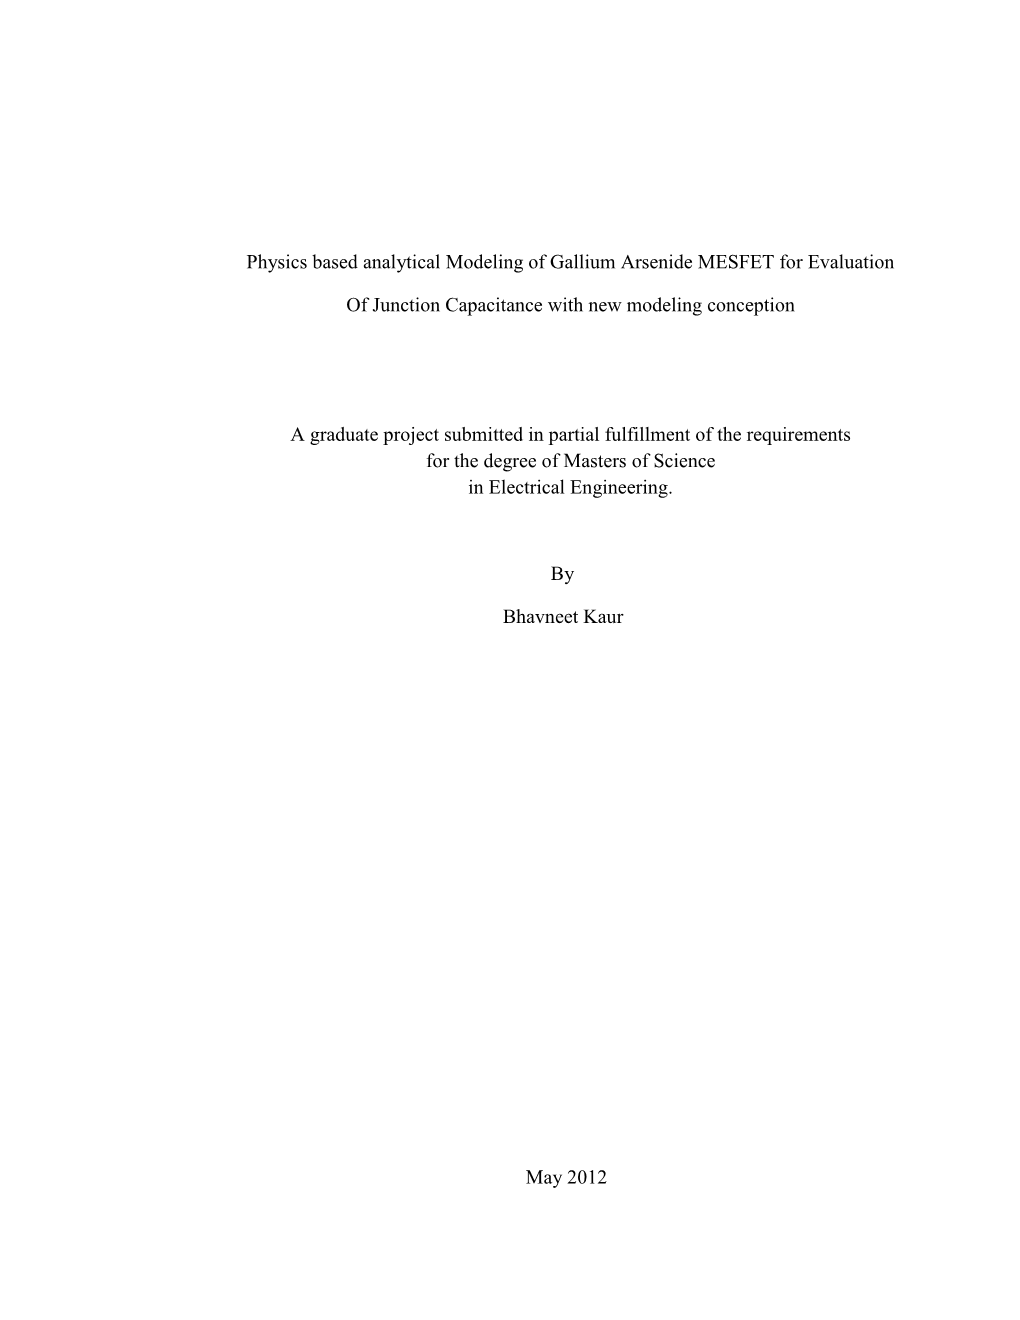 Physics Based Analytical Modeling of Gallium Arsenide MESFET for Evaluation